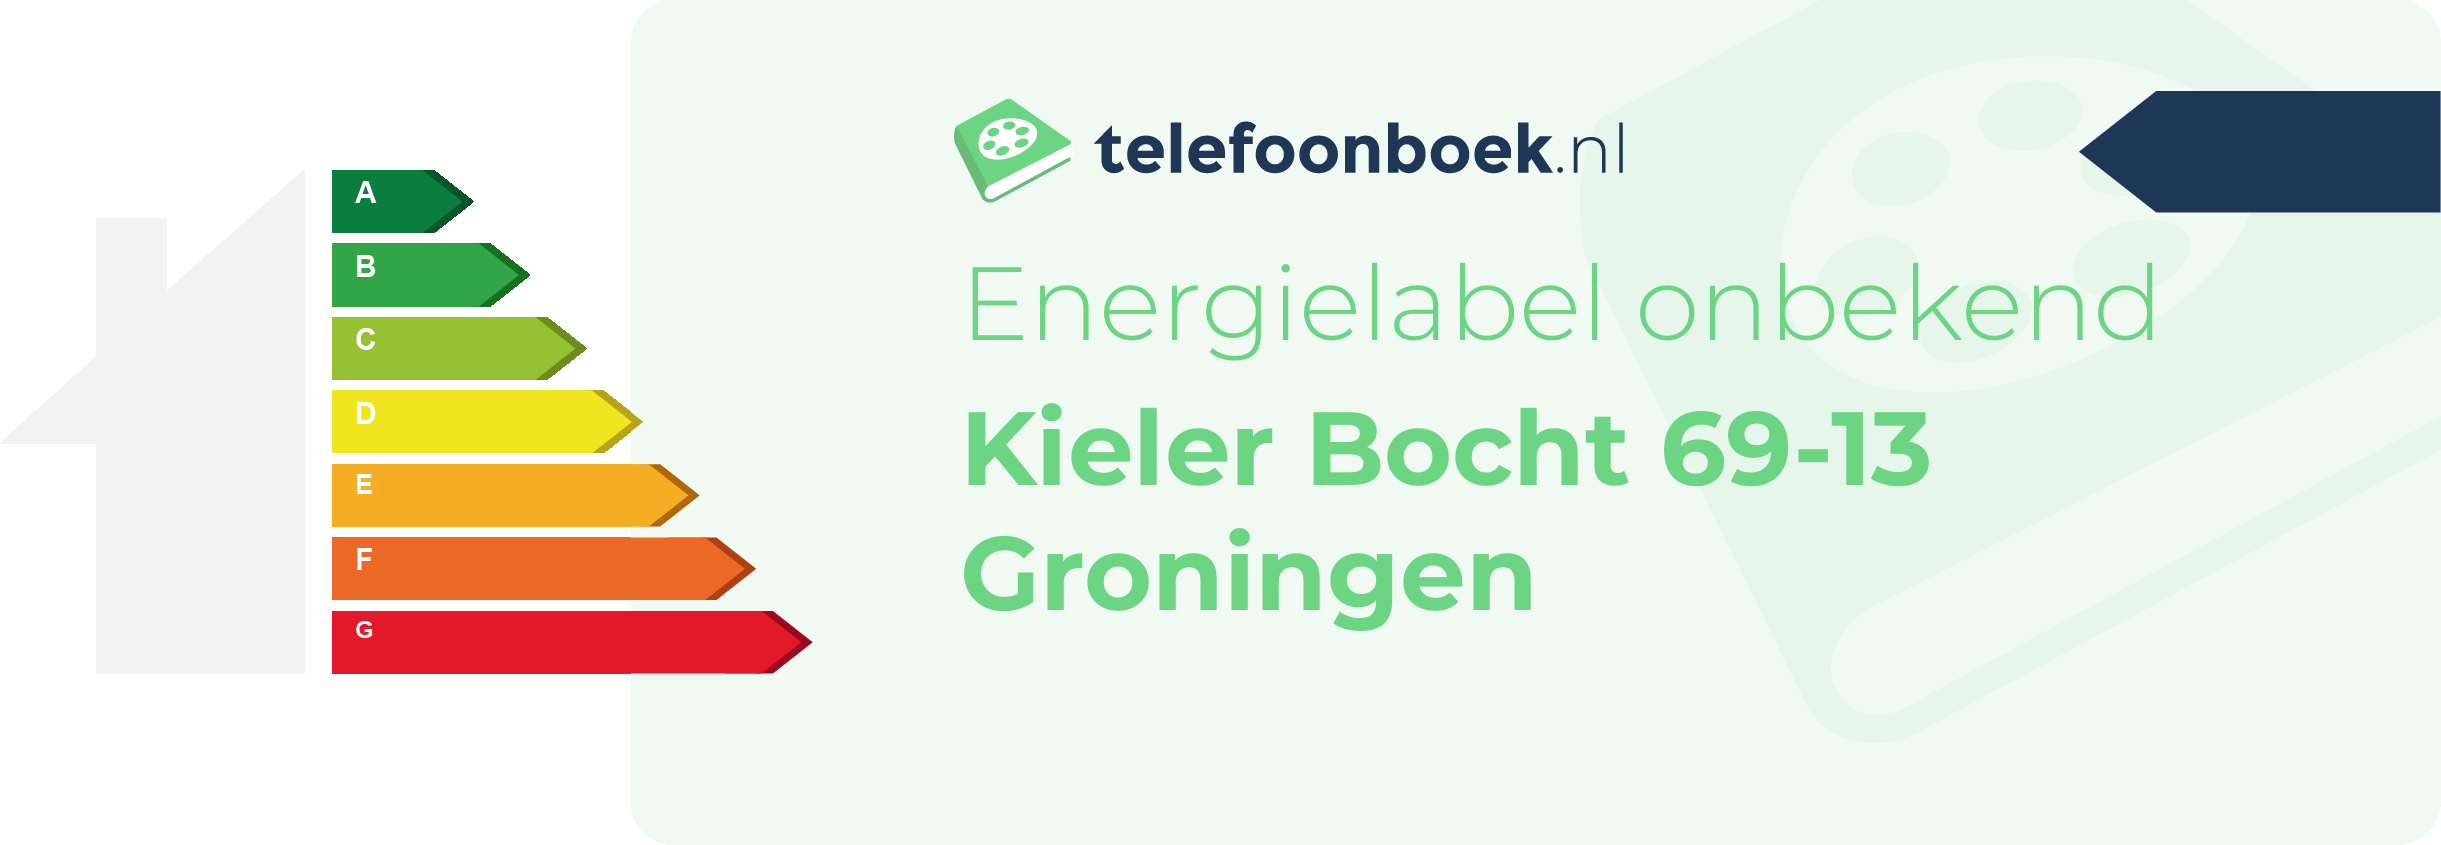 Energielabel Kieler Bocht 69-13 Groningen